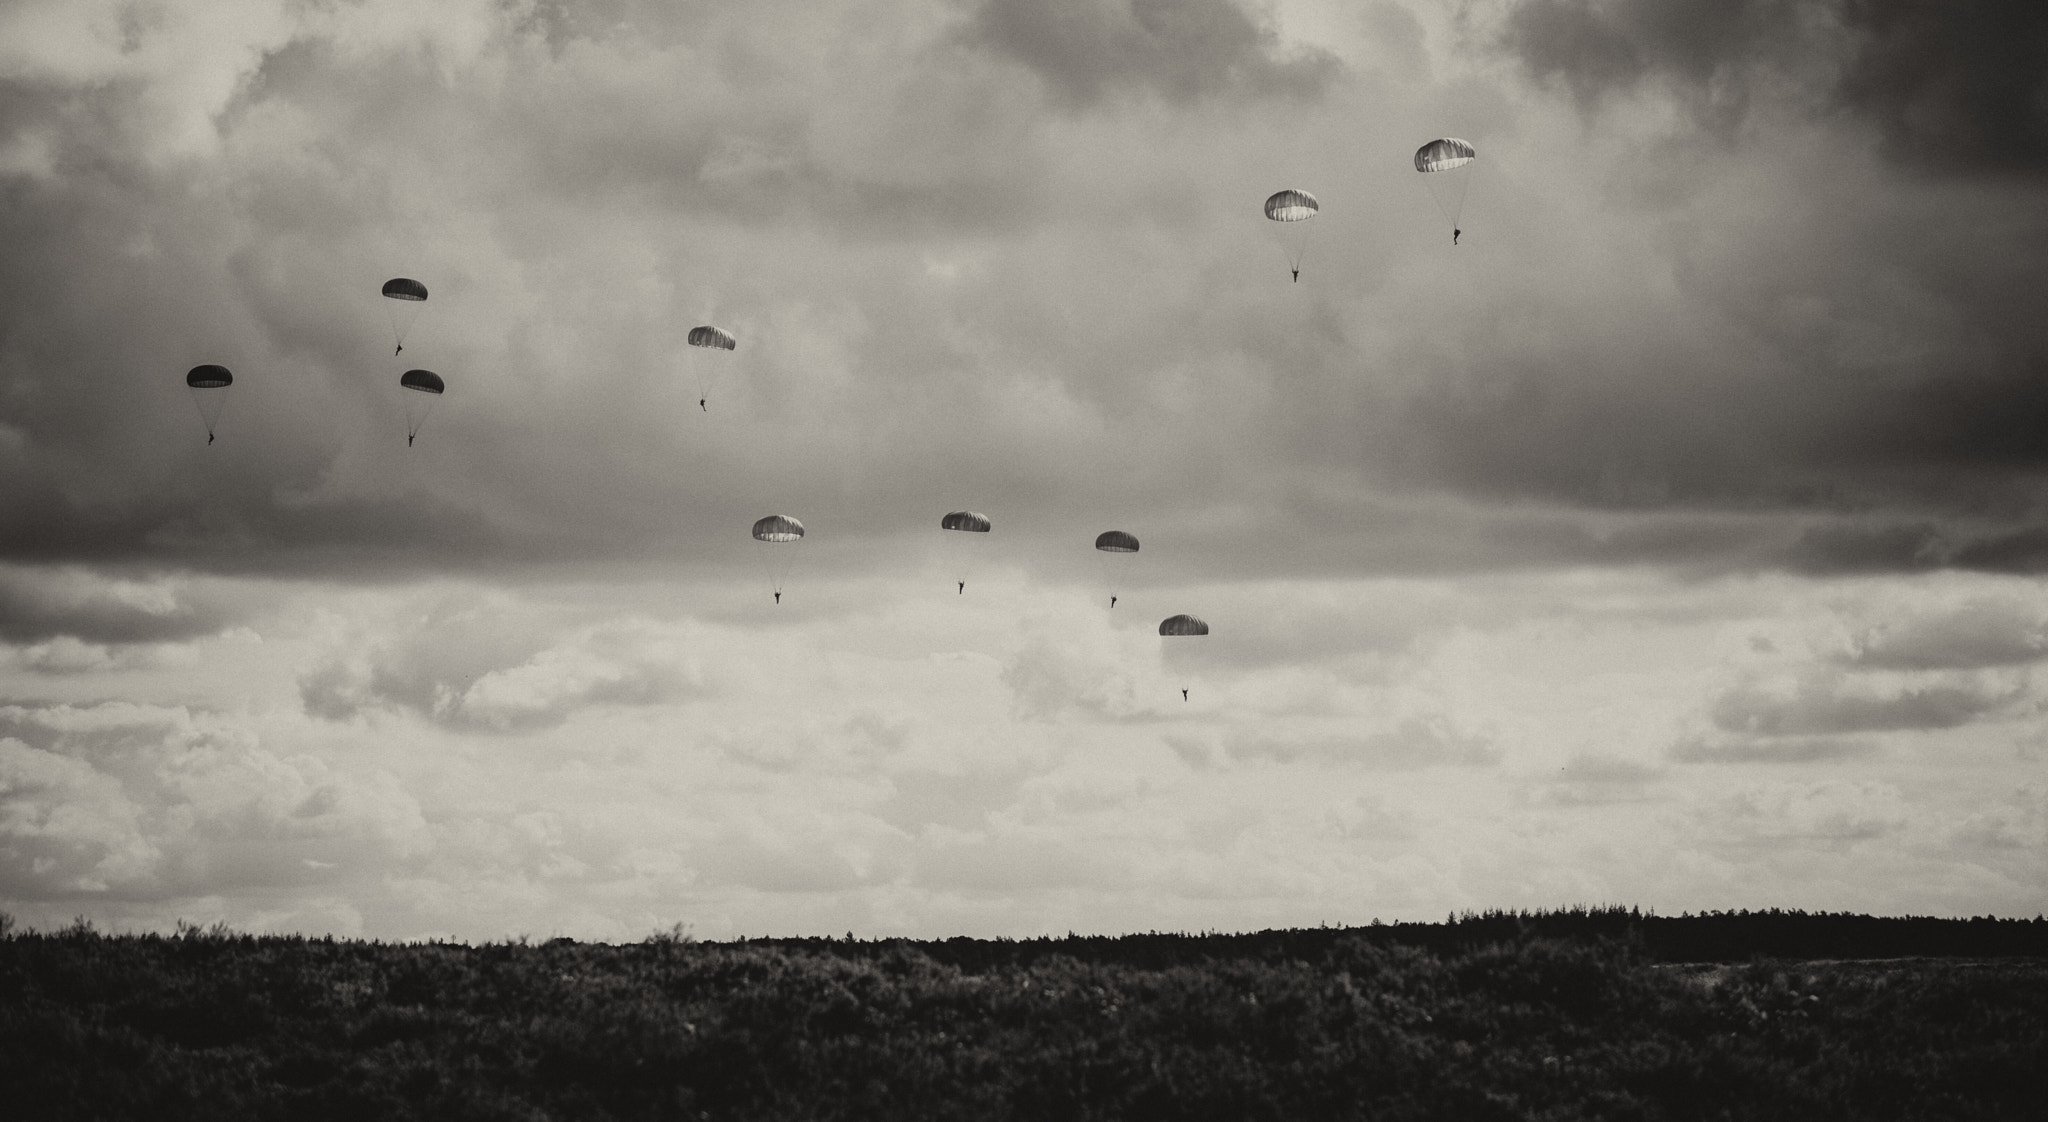 Airdrop in commemoration of Operation Market Garden (WWII). Taken at Ginkel Heath, Ede, Netherlands